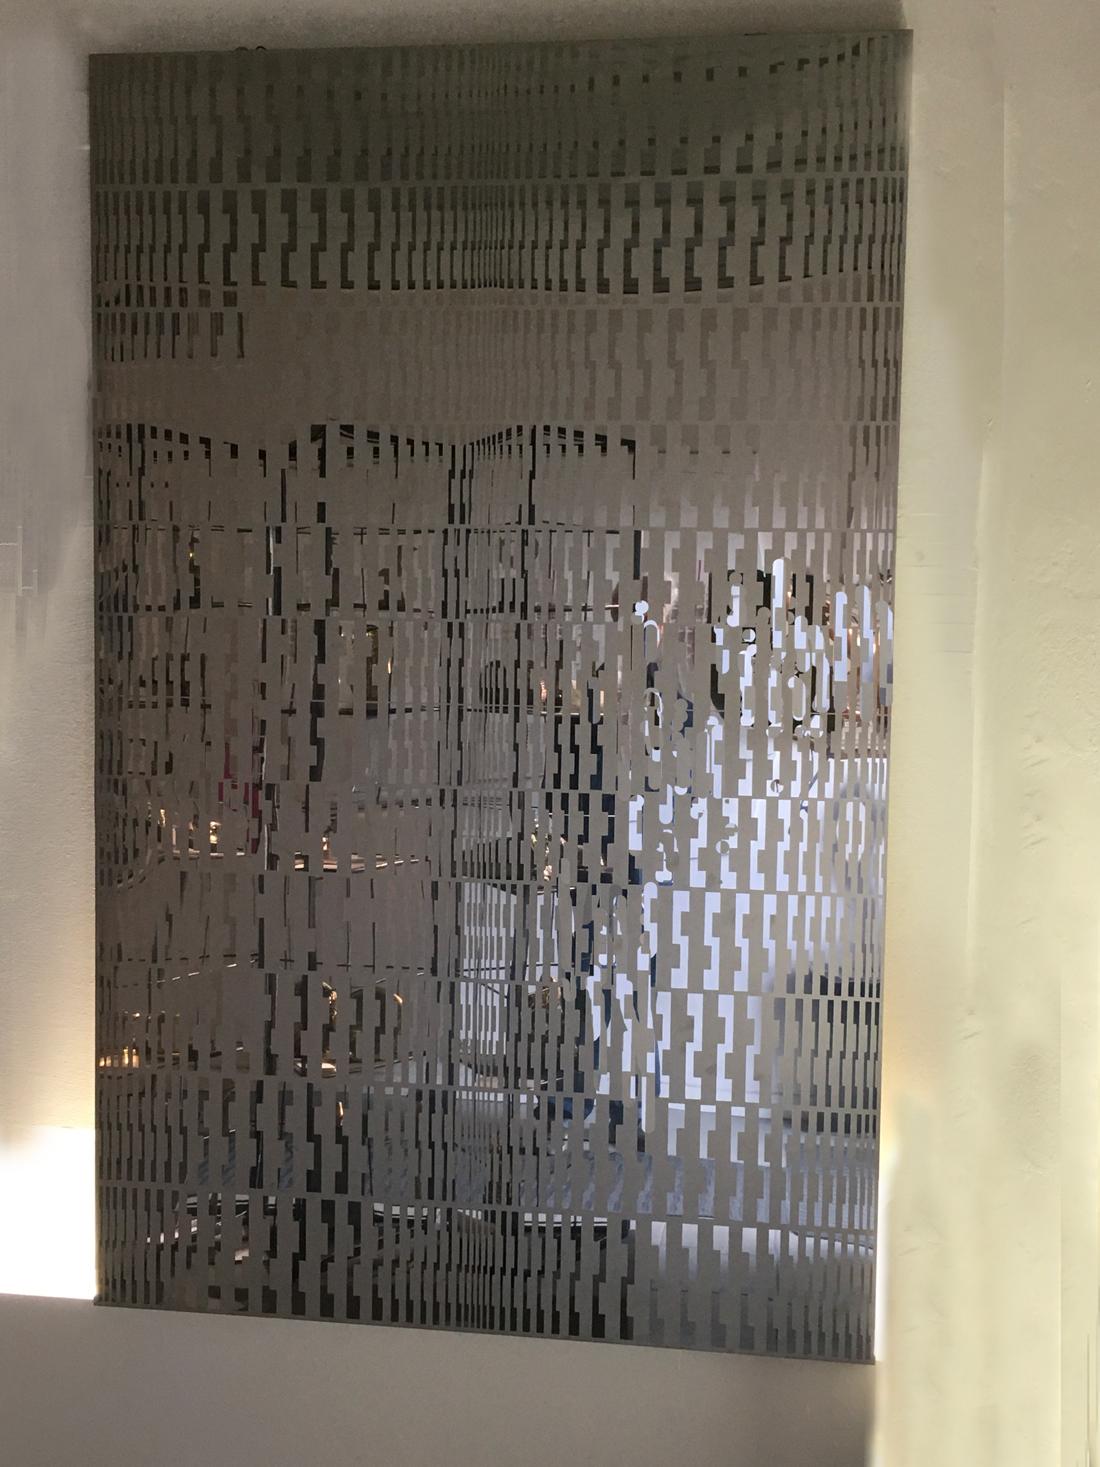 1960 Italy Modular Kinetic Stainless Steel Abstract Wall Panel by Maldonado - Abstract Geometric Mixed Media Art by Estuardo Maldonado